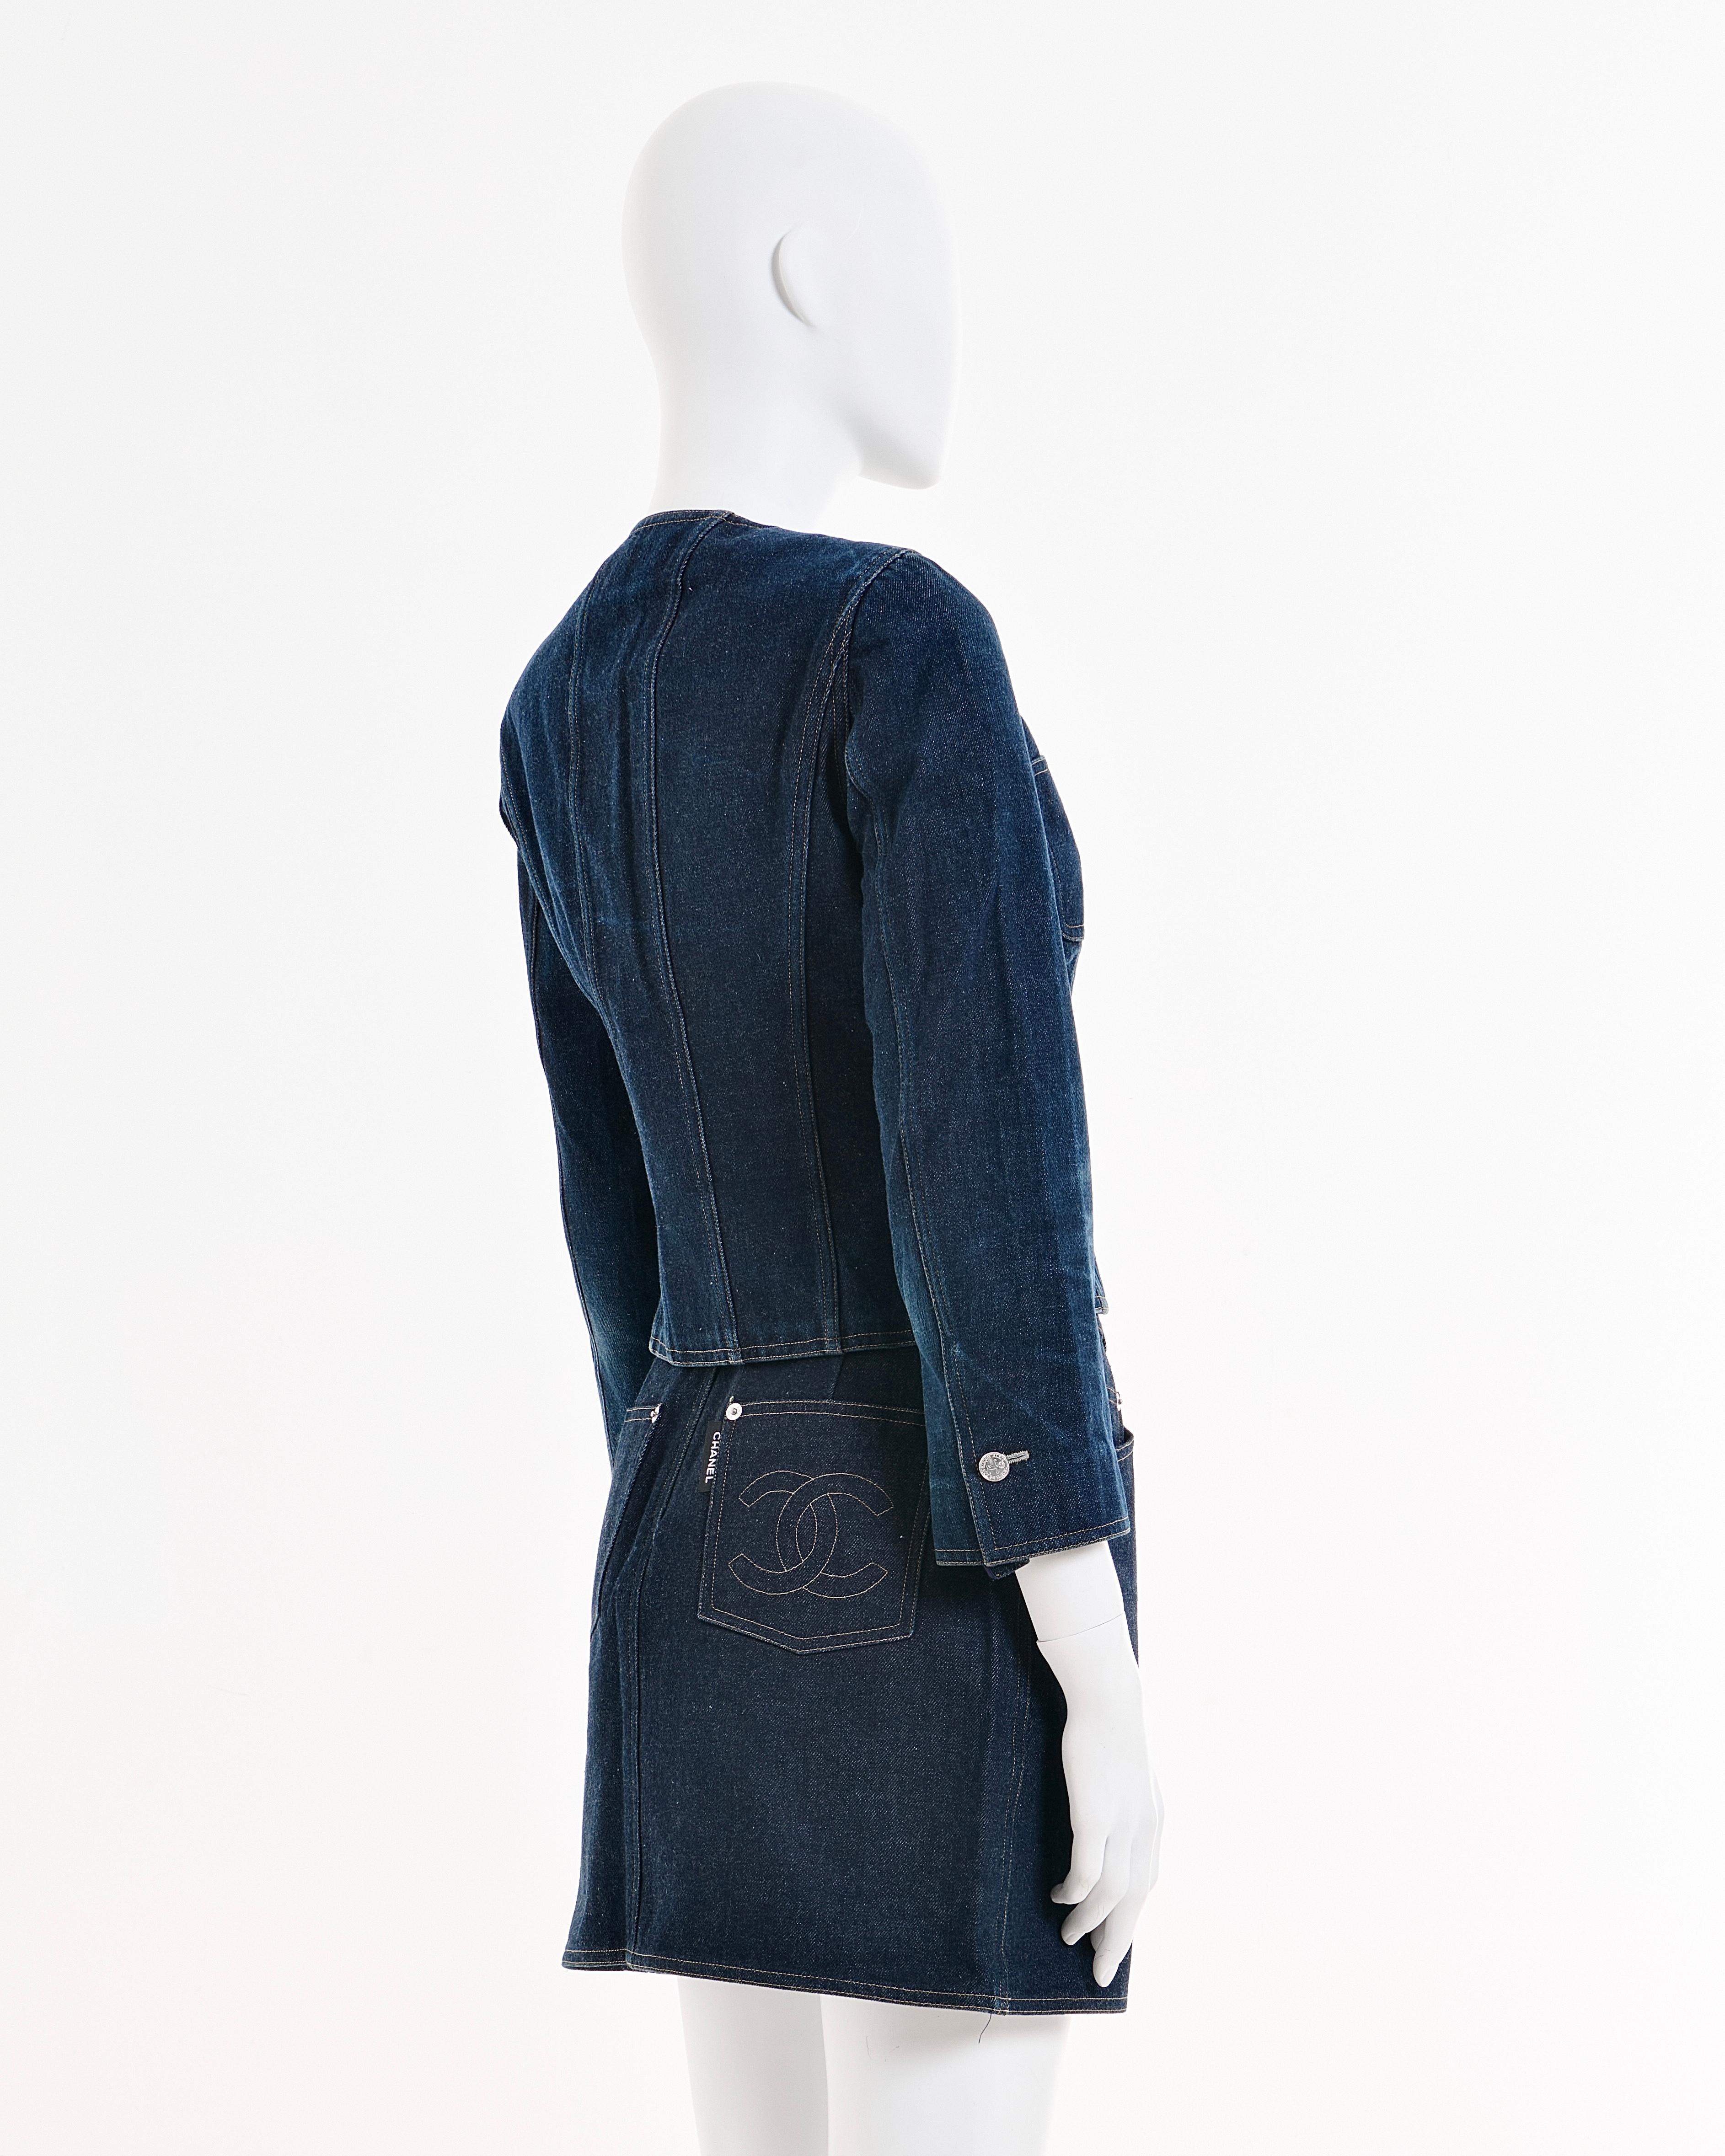 Chanel by Karl Lagerfeld S/S 1996 Blue denim indigo jacket and mini skirt set For Sale 4